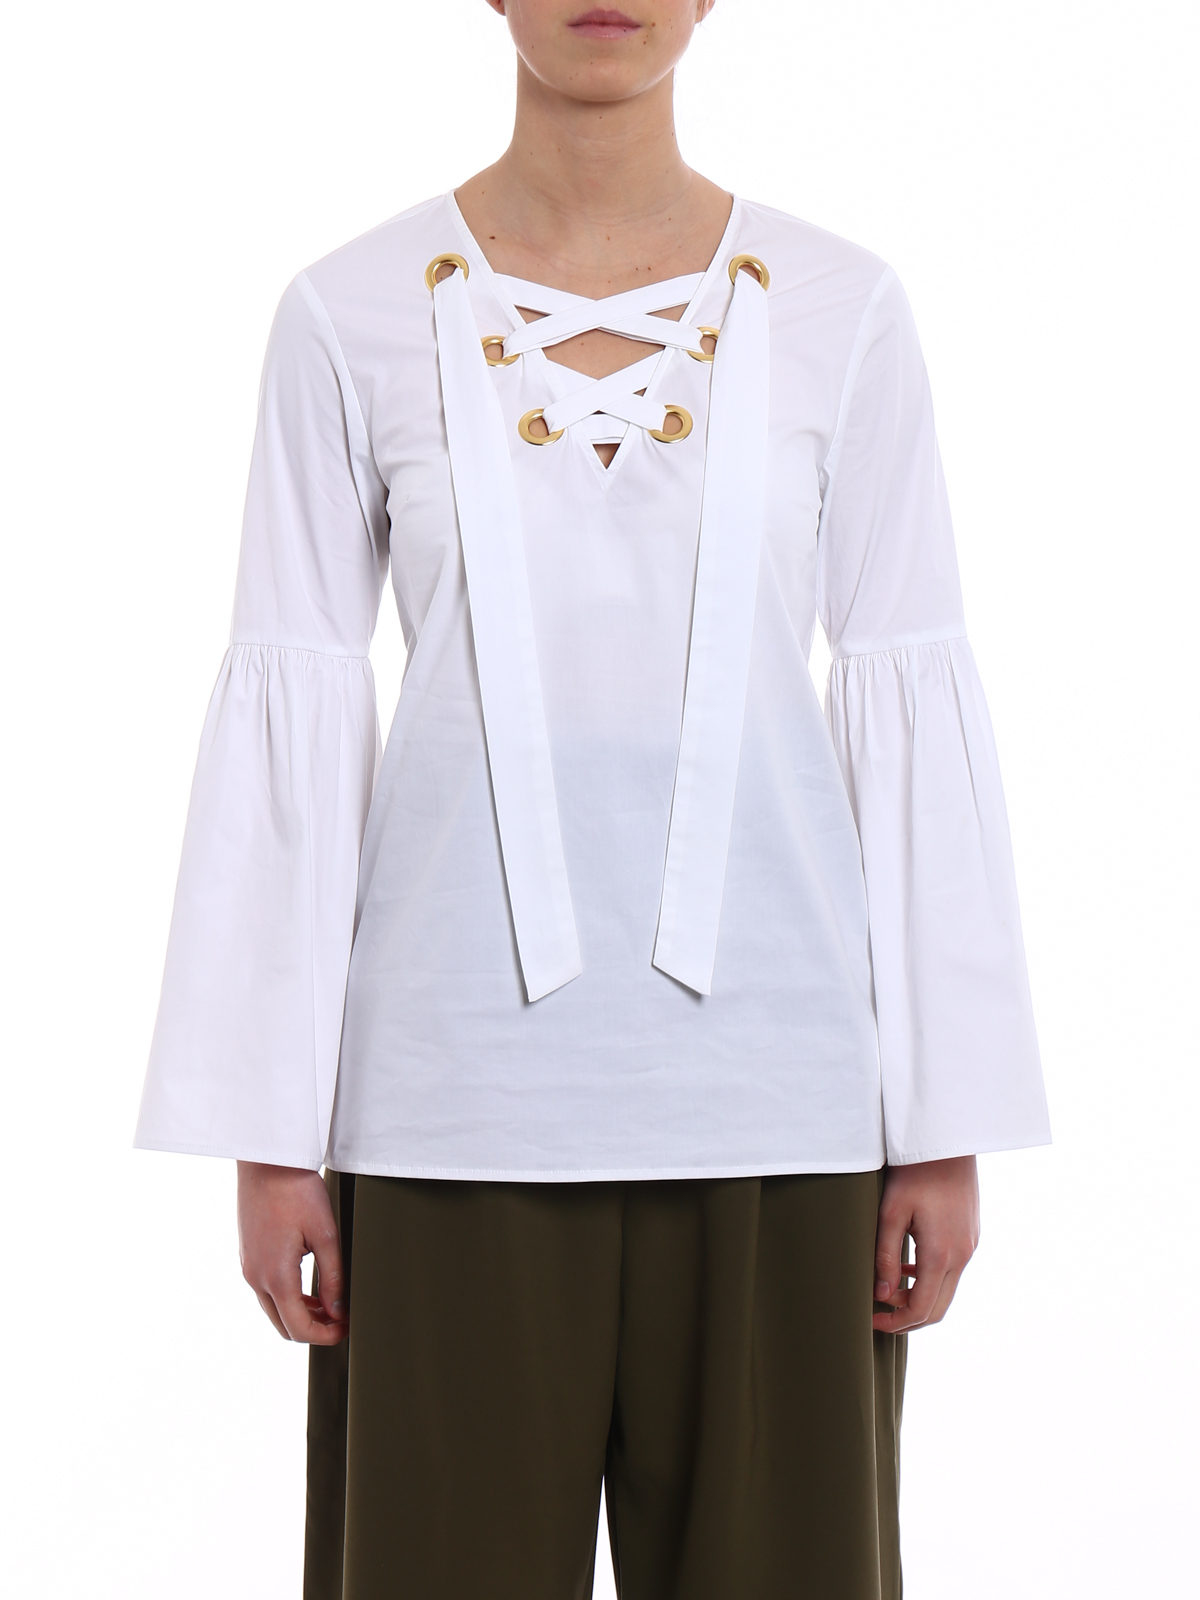 michael kors white blouse